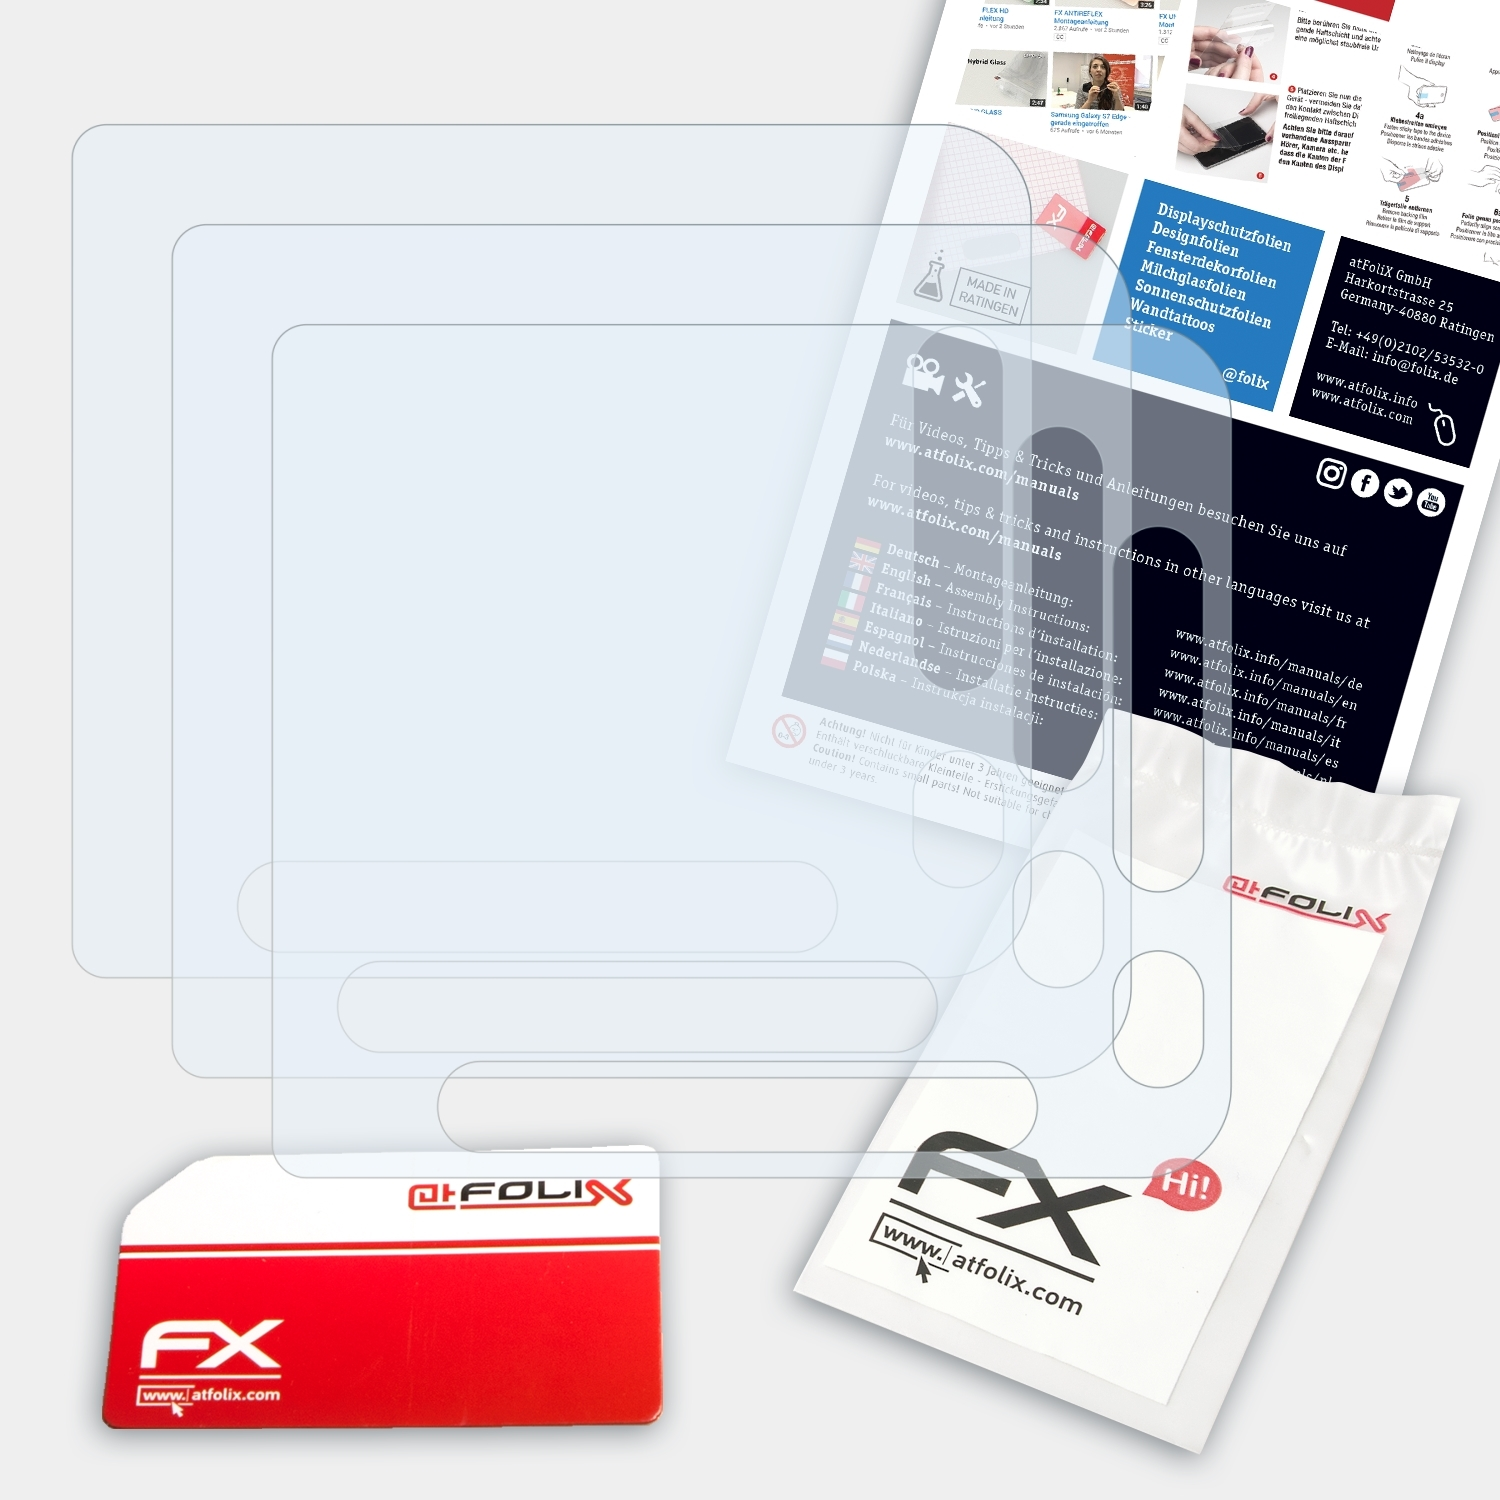 ATFOLIX 3x FX-Clear DSC-RX0 Sony II) Displayschutz(für